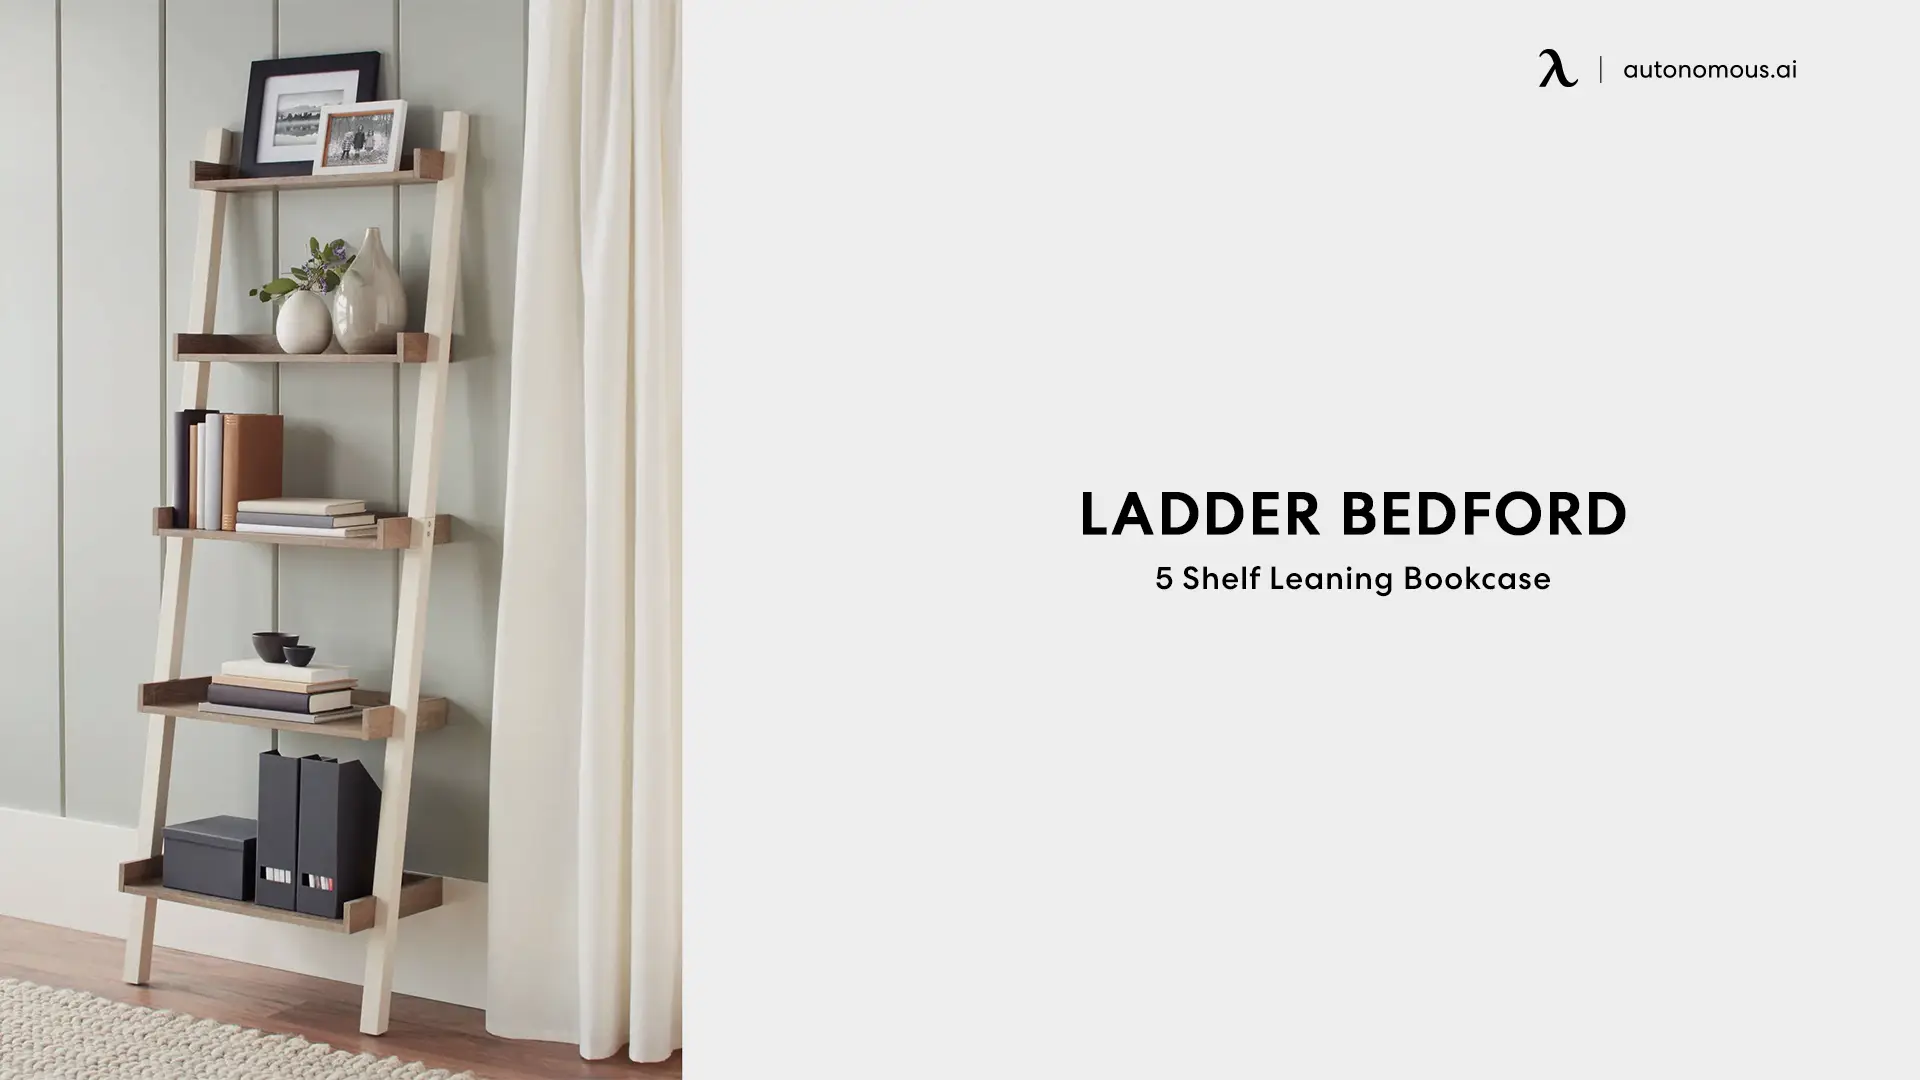 Ladder Bedford 5 Shelf Leaning Bookcase